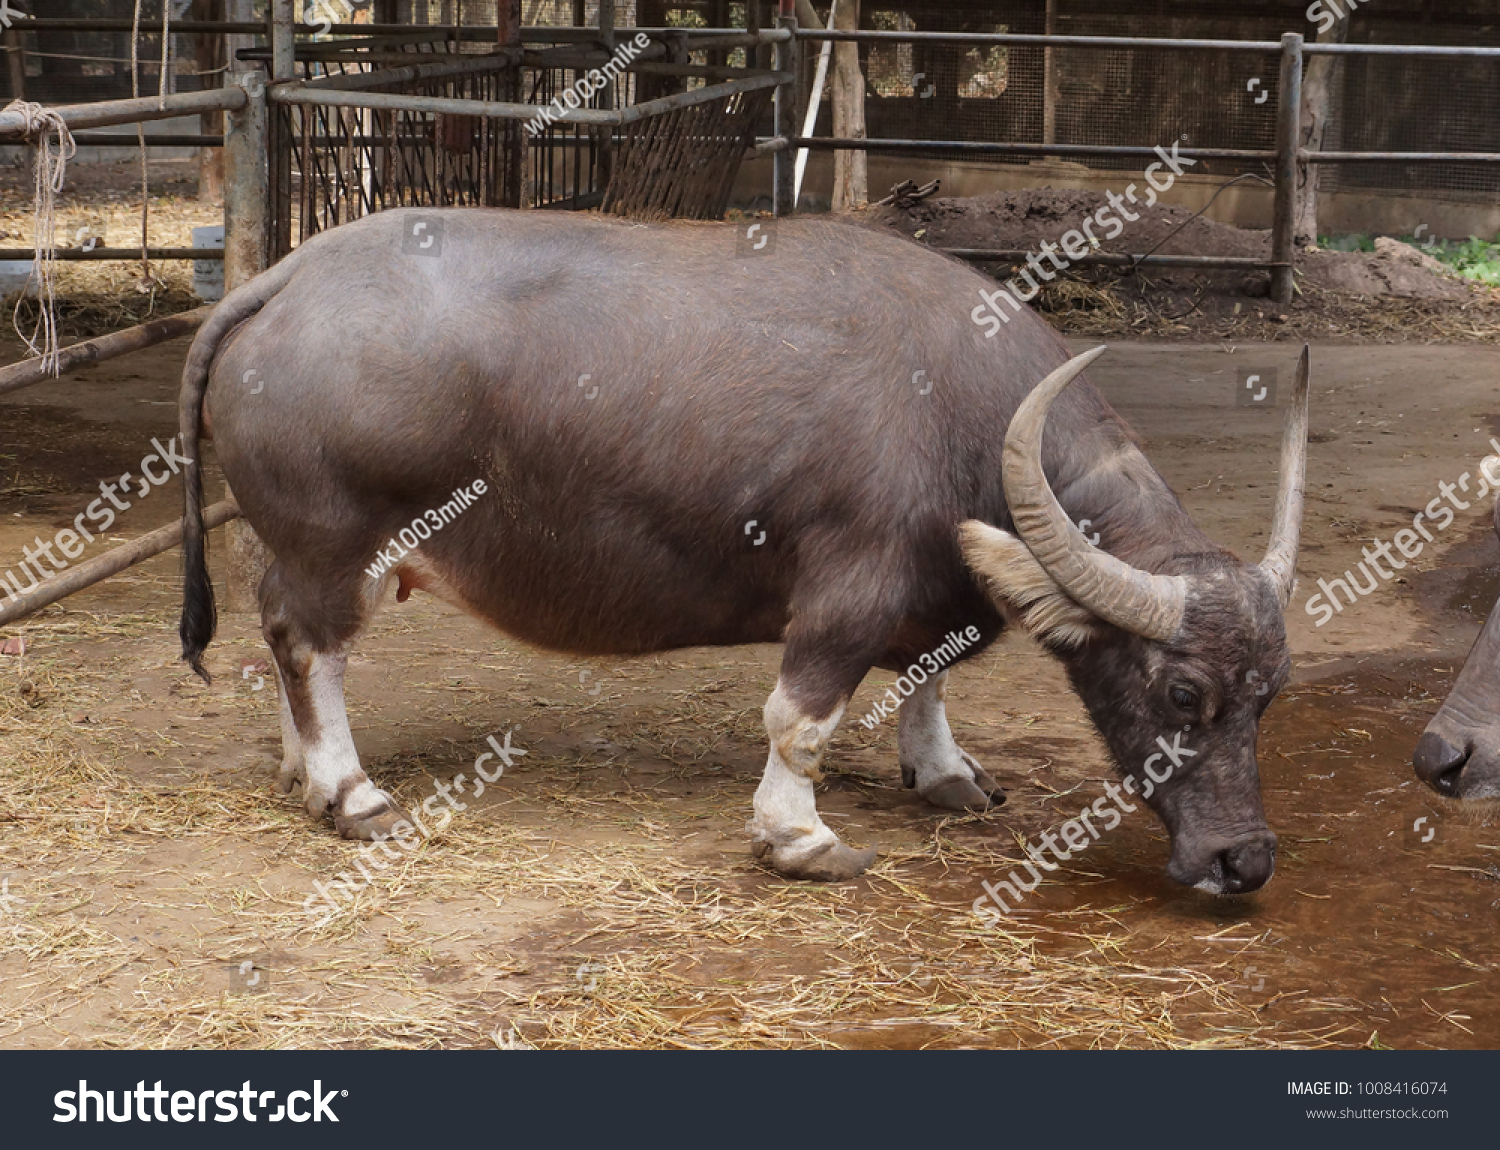 Dwarf Buffalo Buffalo Born Abnormoality Short Photo Now) 1008416074